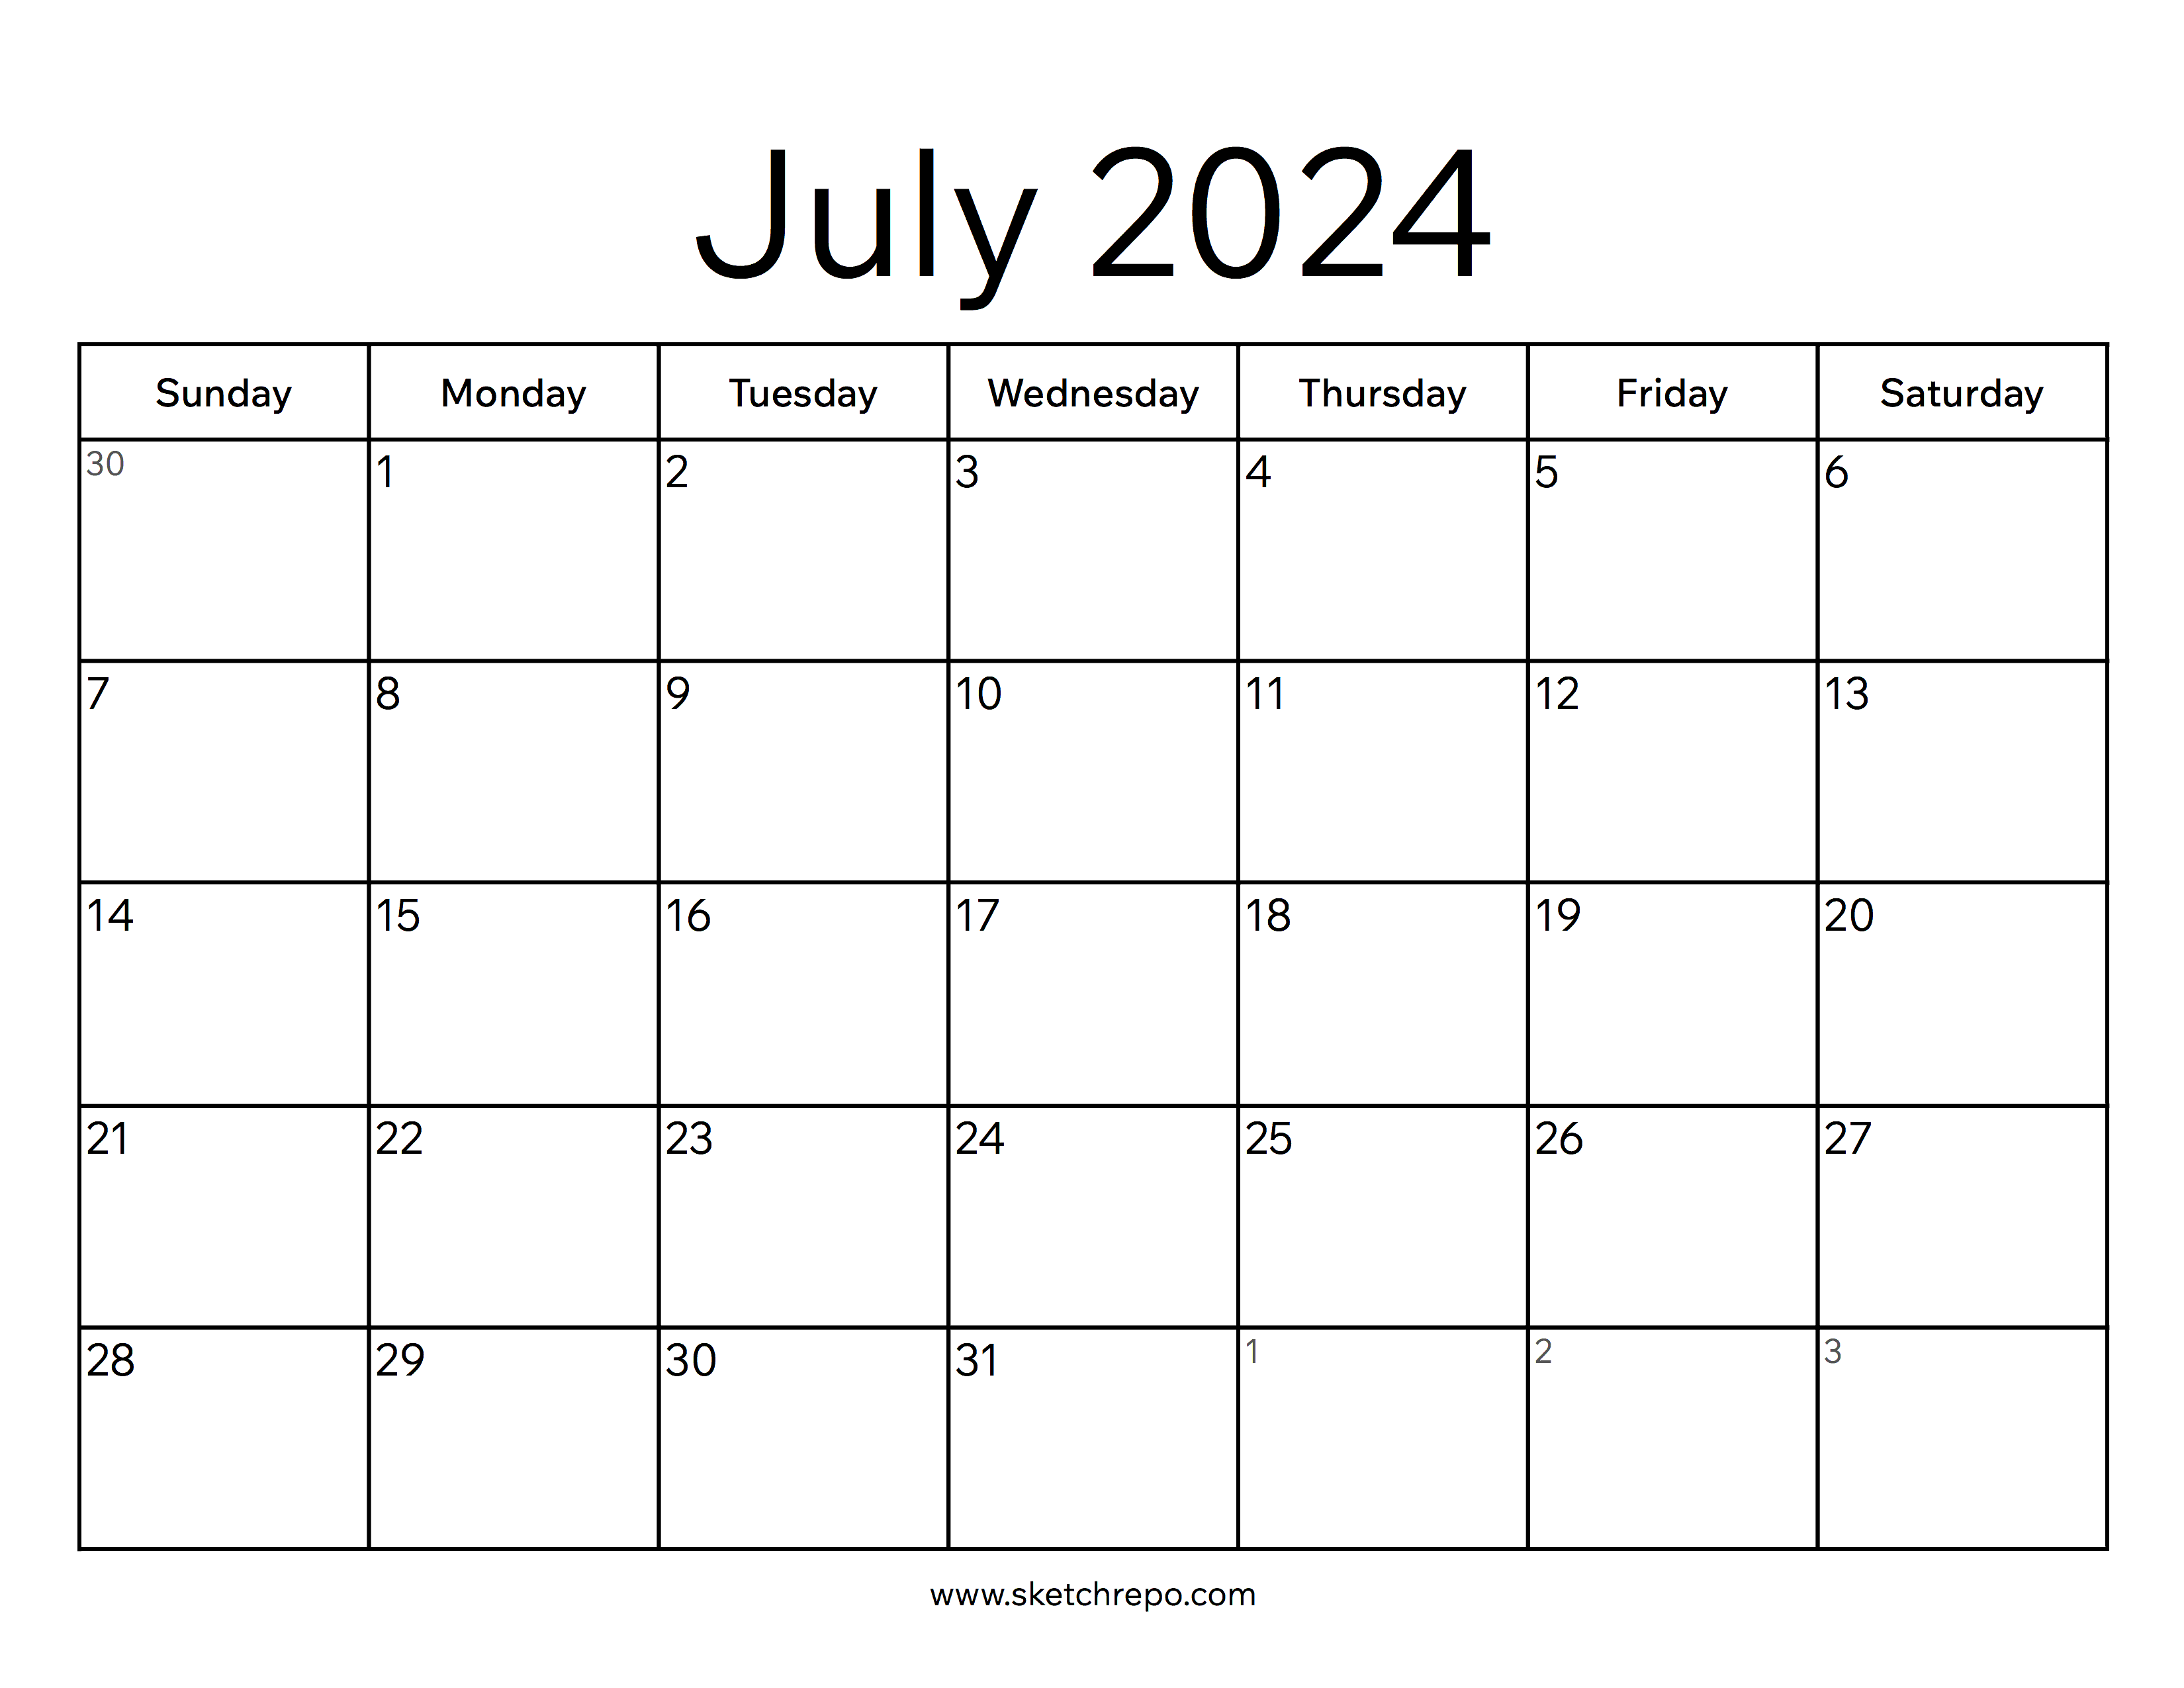 July 2024 Calendar – Sketch Repo regarding July 16 2024 Calendar